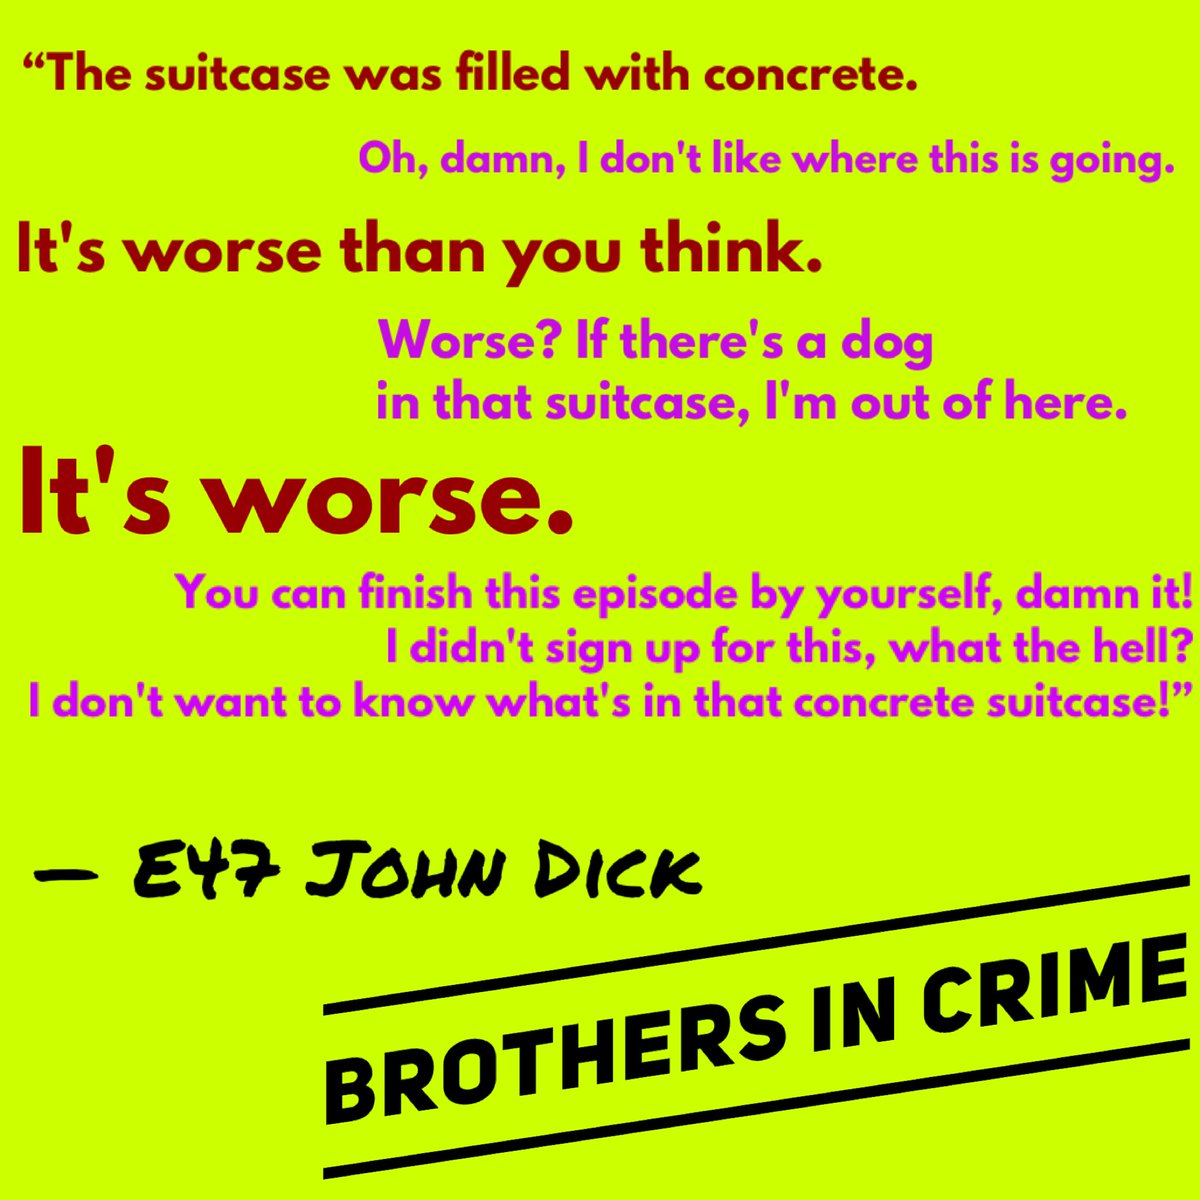 🎧 E47 about Canada’s notorious Torso Murder is available wherever you listen to podcasts or on our website: brothersincrimepodcast.com/e47-john-dick/

#truecrime #podcast #evelyndick #canada #hamiltonontario